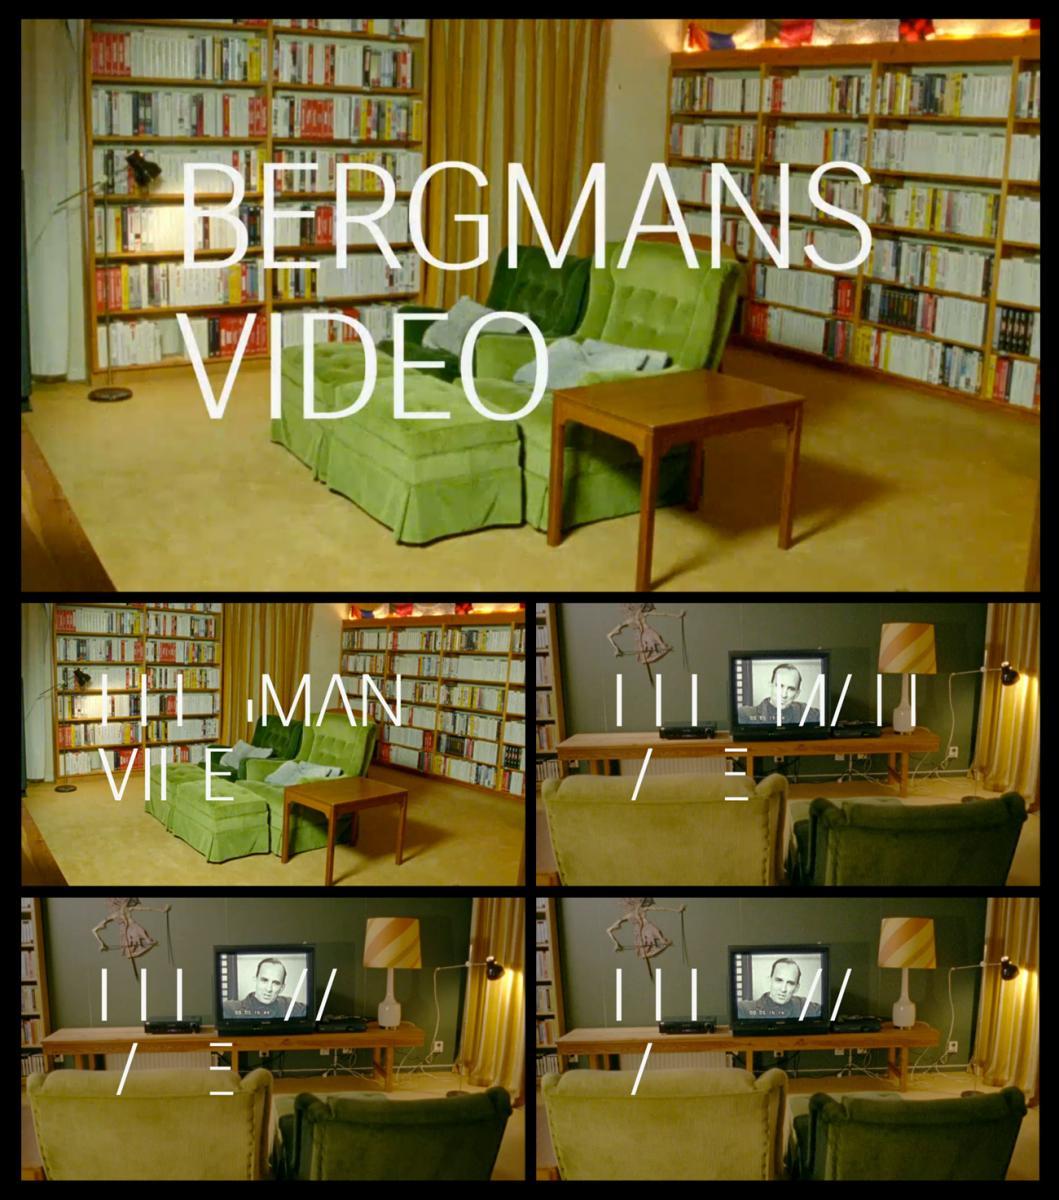 Bergmans Video (TV Miniseries)